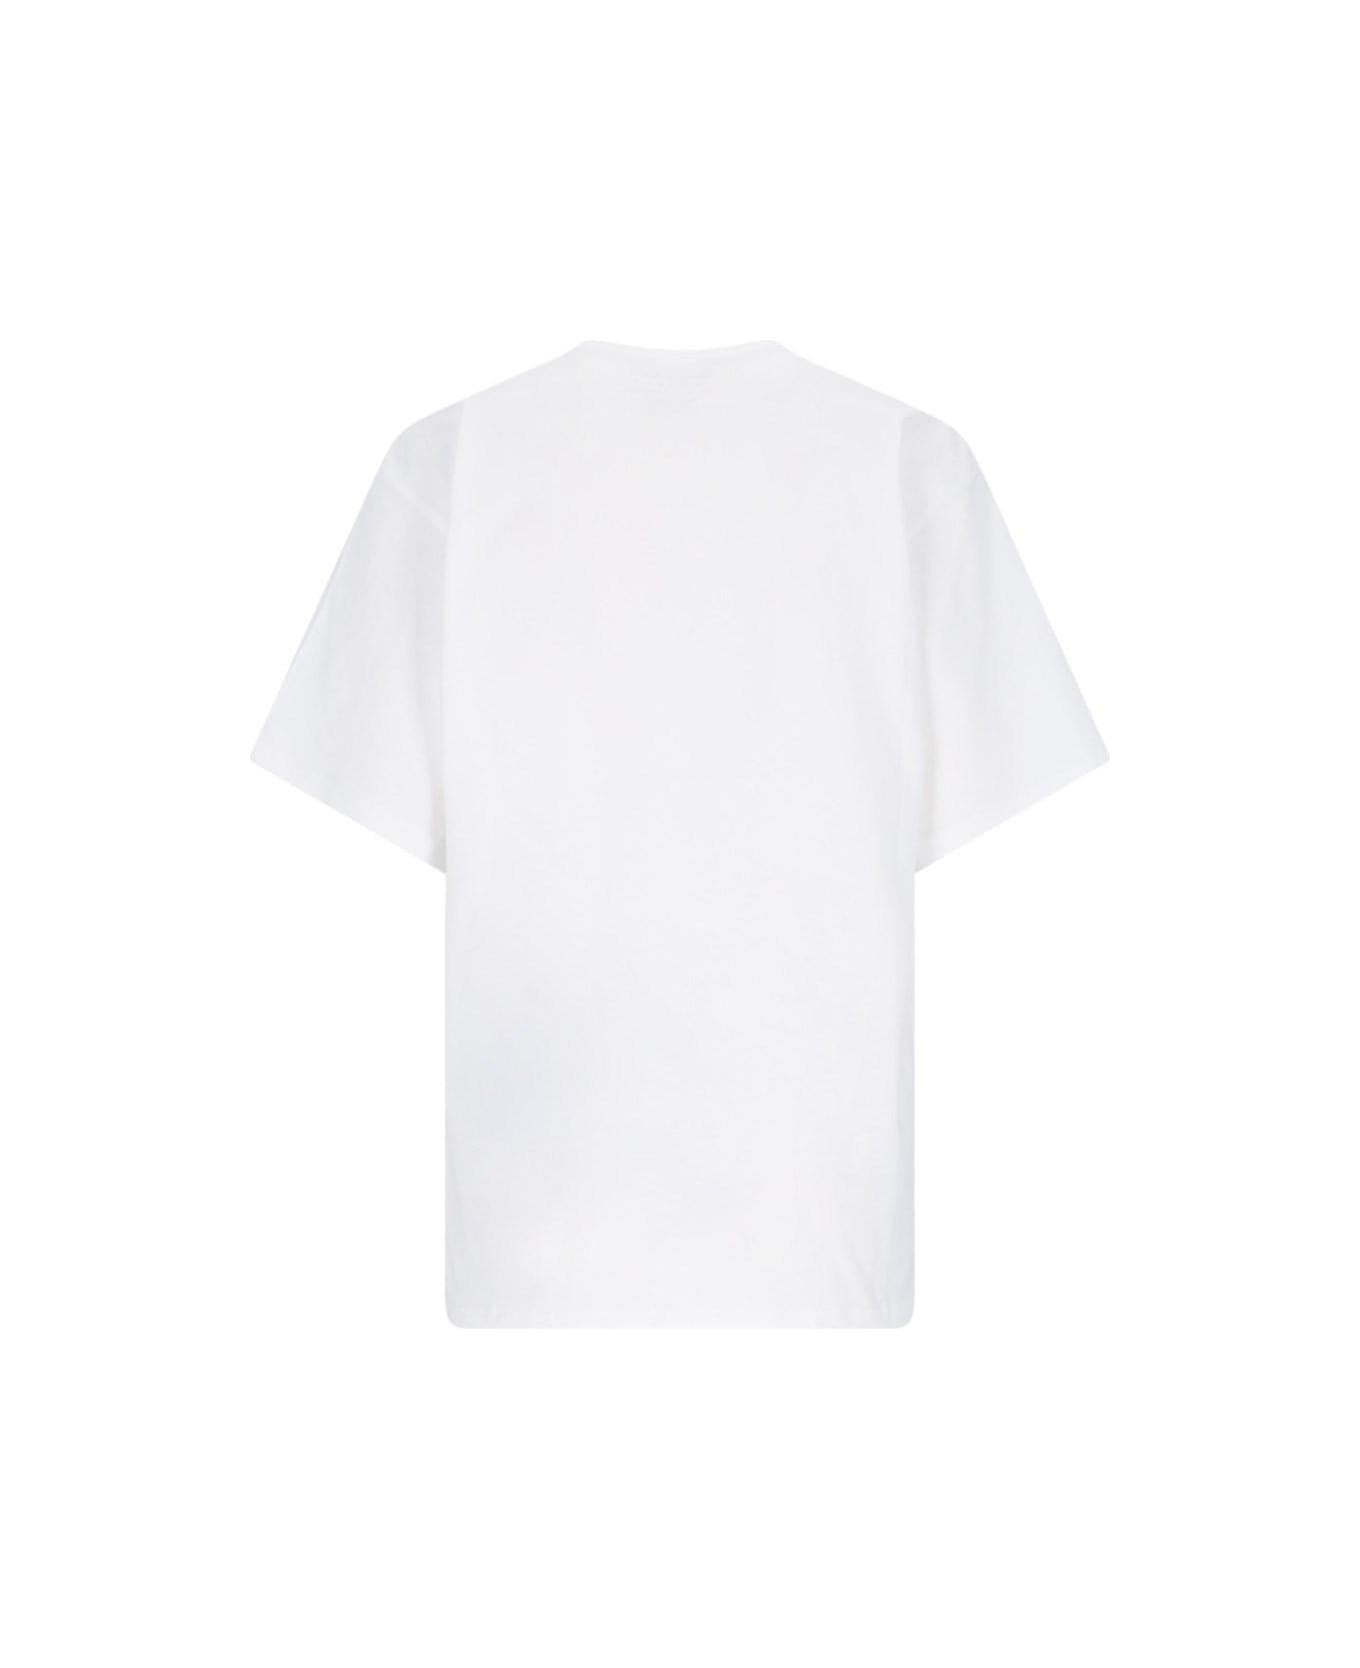 Martine Rose Logo T-shirt - WHITE